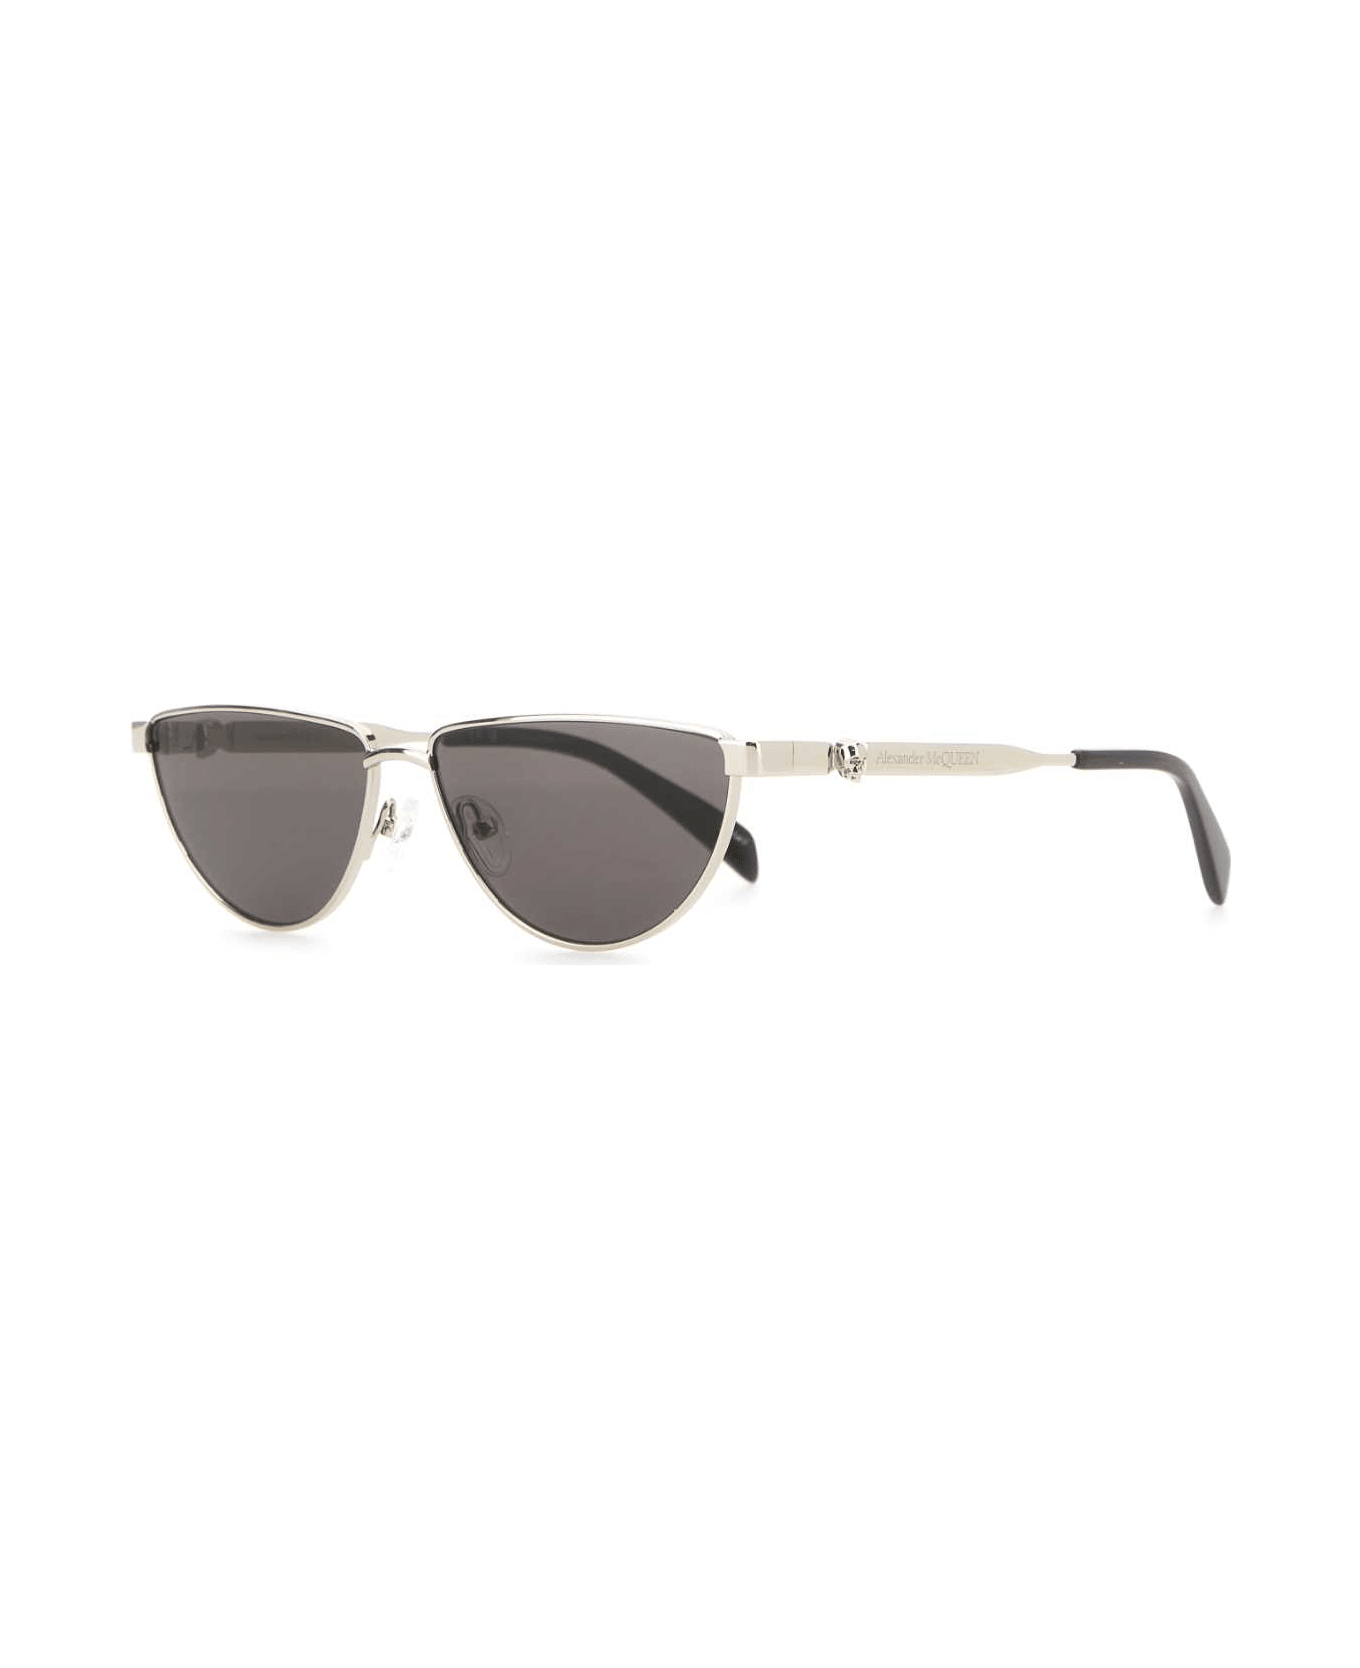 Alexander McQueen Silver Metal Sunglasses - SILVERSILVERSMOKE